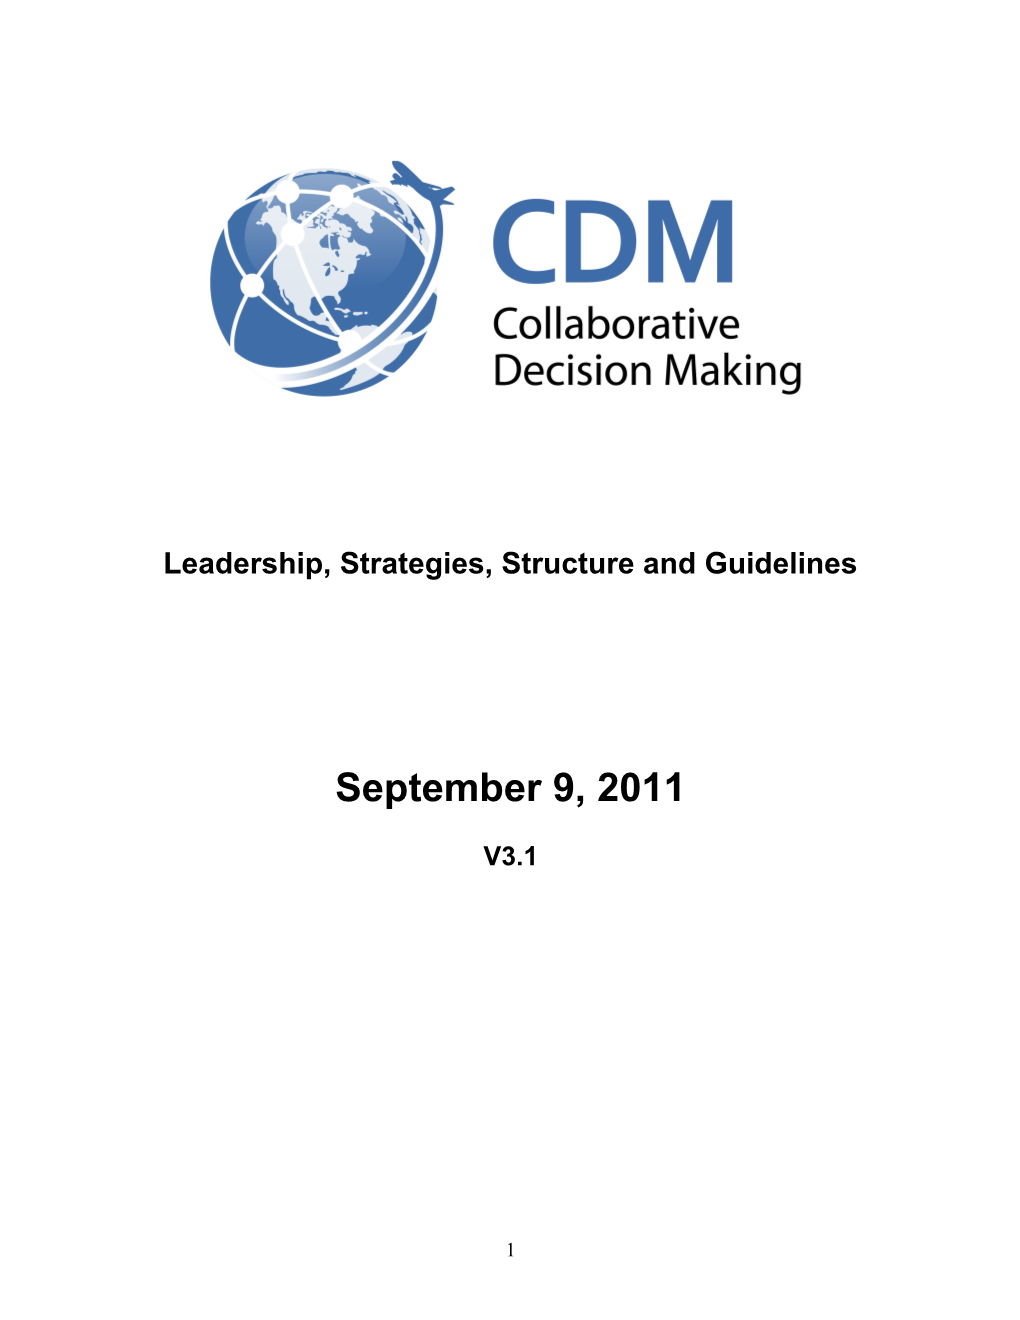 Collaborative Decision Making (CDM) 2005 Structure